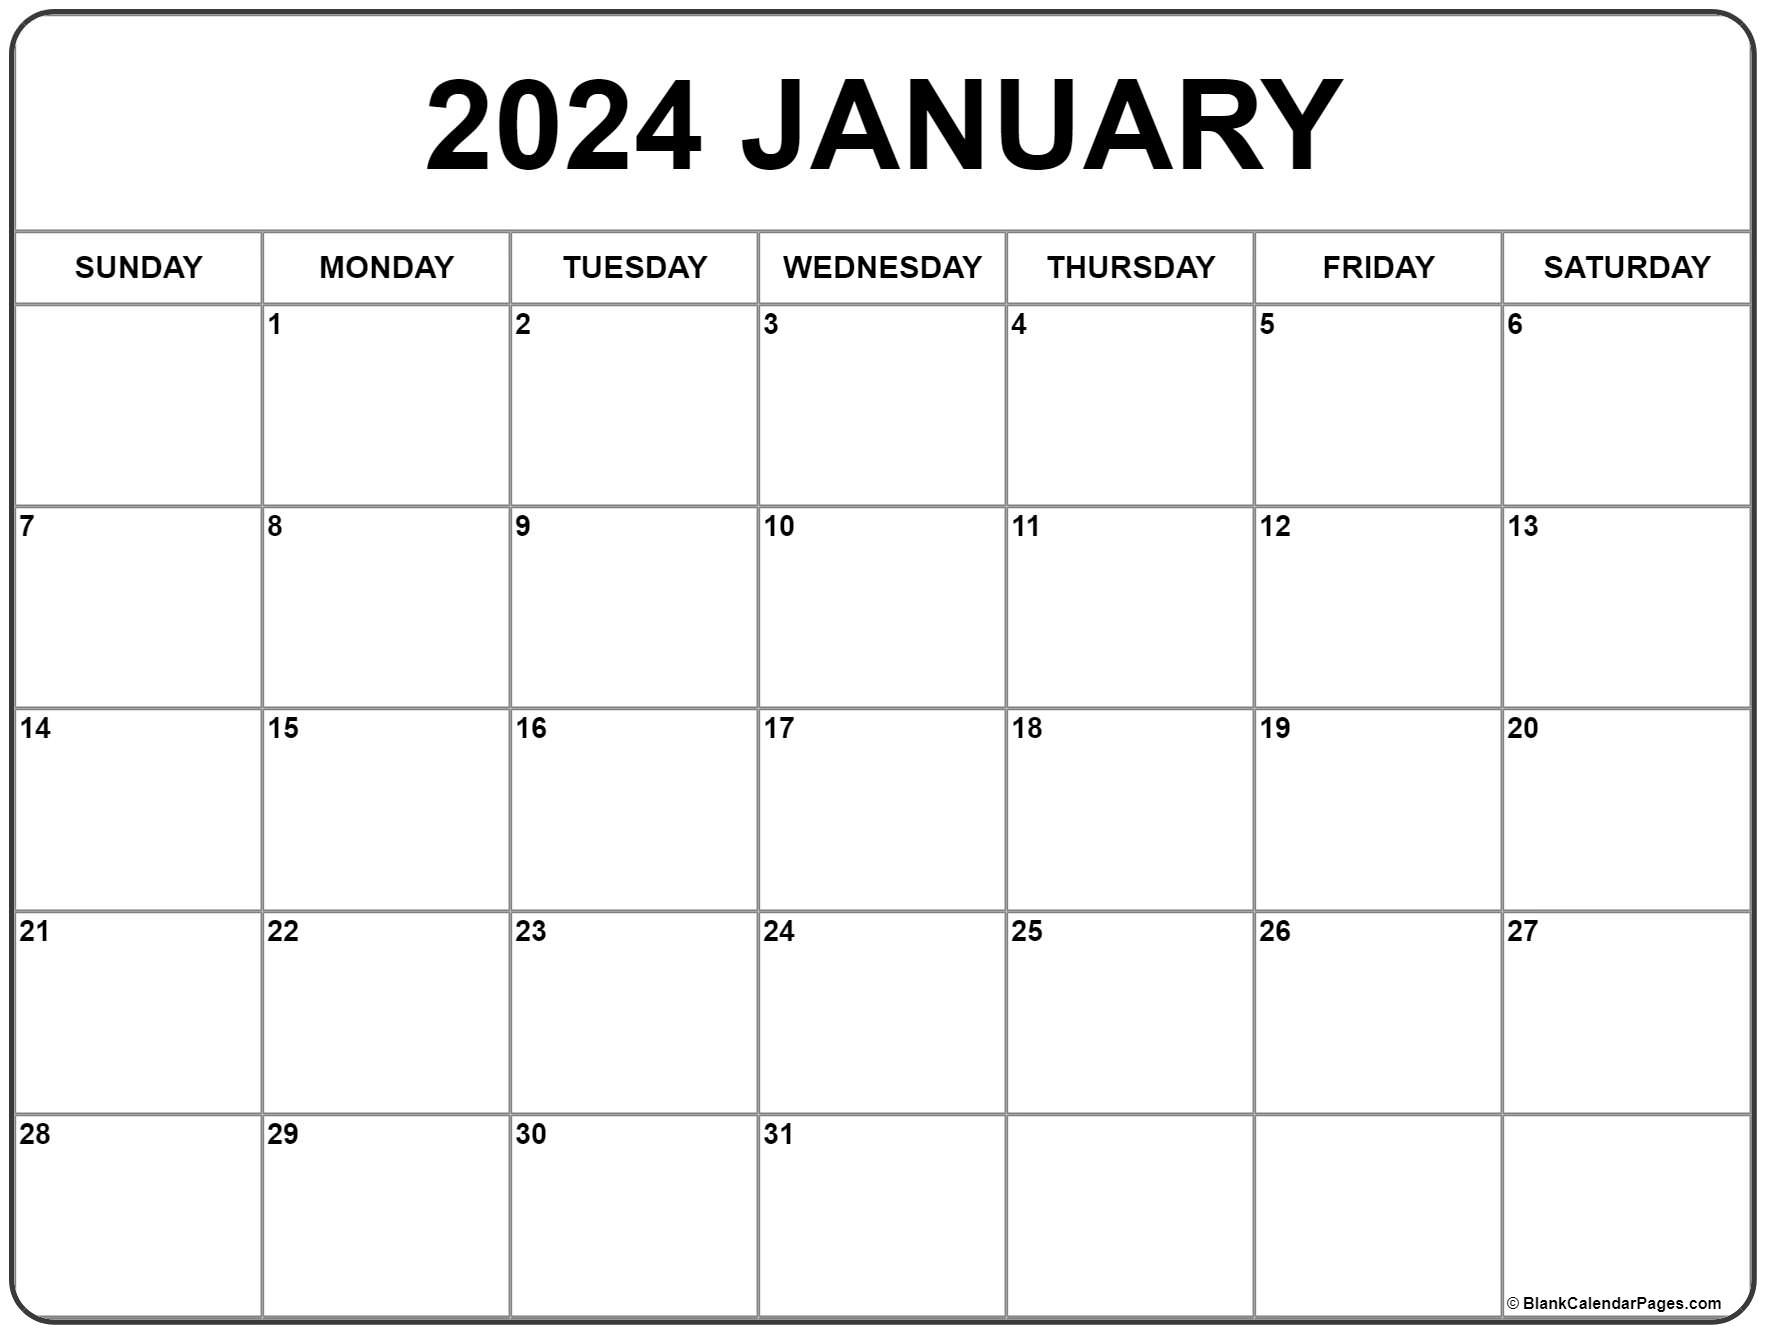 January 2024 Calendar | Free Printable Calendar for Free Printable 2024 January Calendar